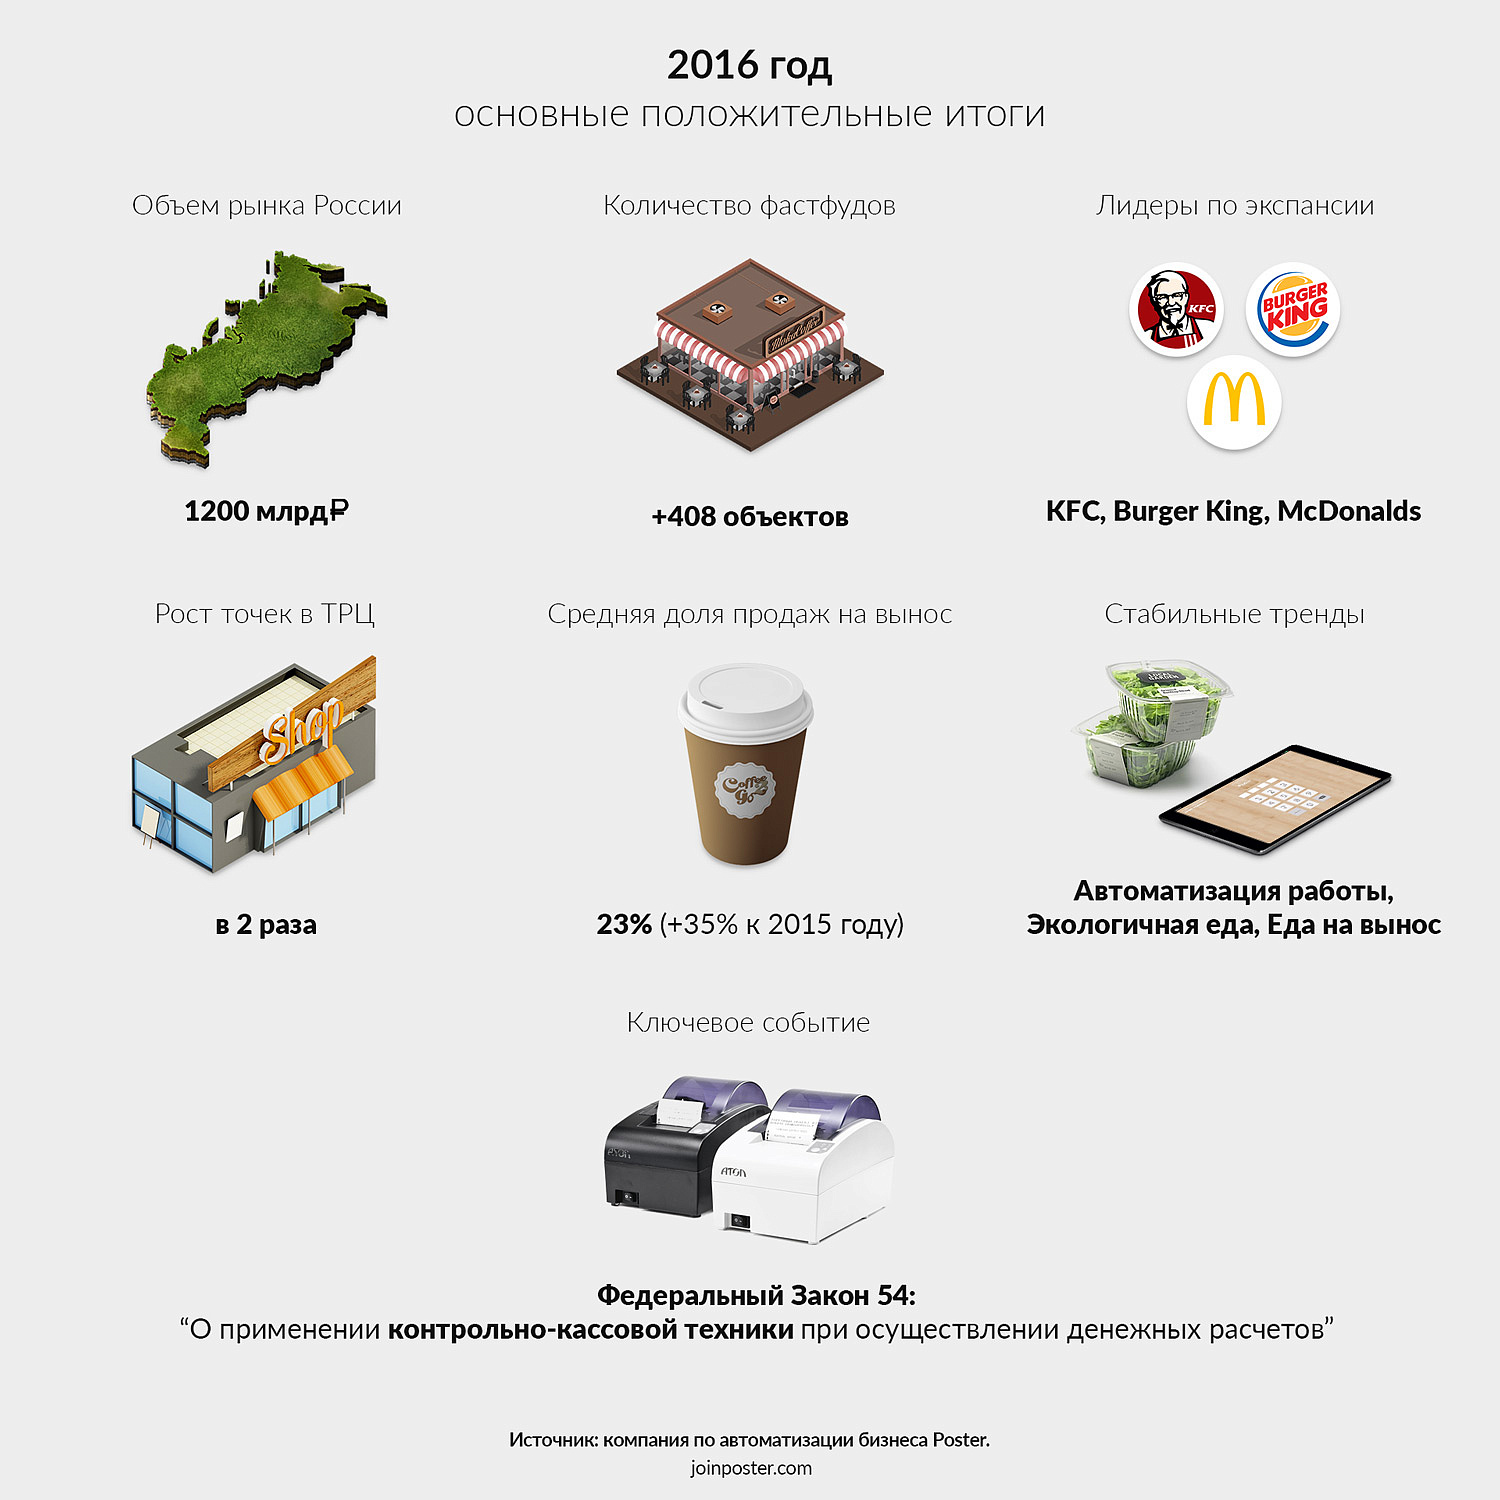 Poster: итоги 2016 на ресторанном рынке